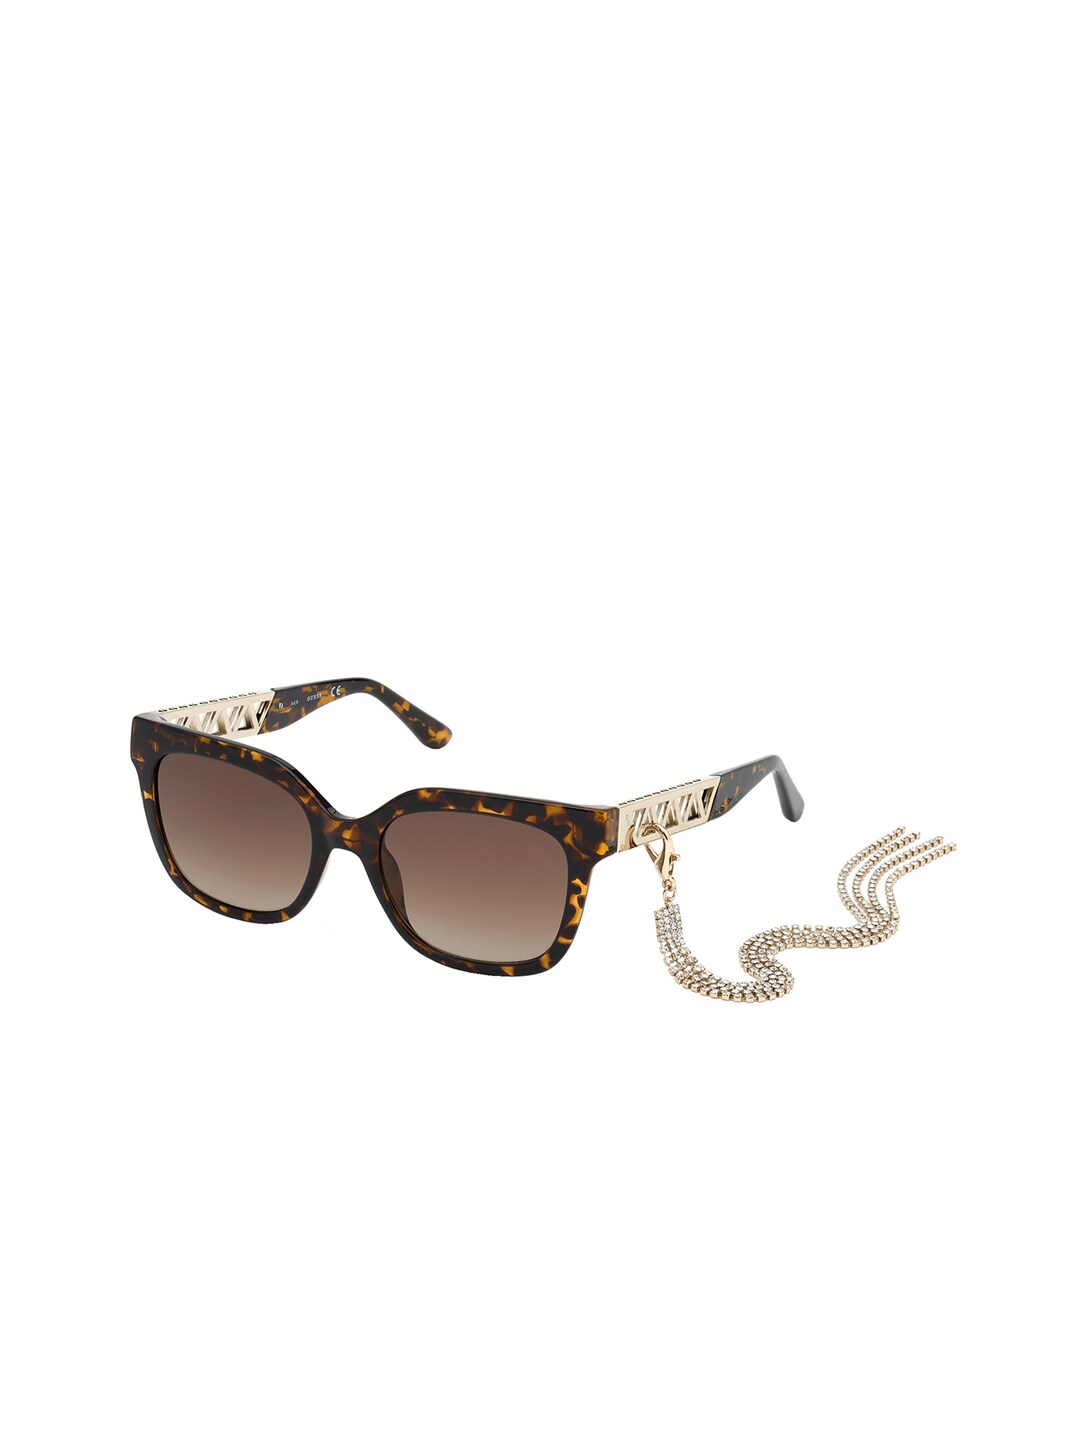 GUESS Women Square Sunglasses GU7691 54 52F Price in India